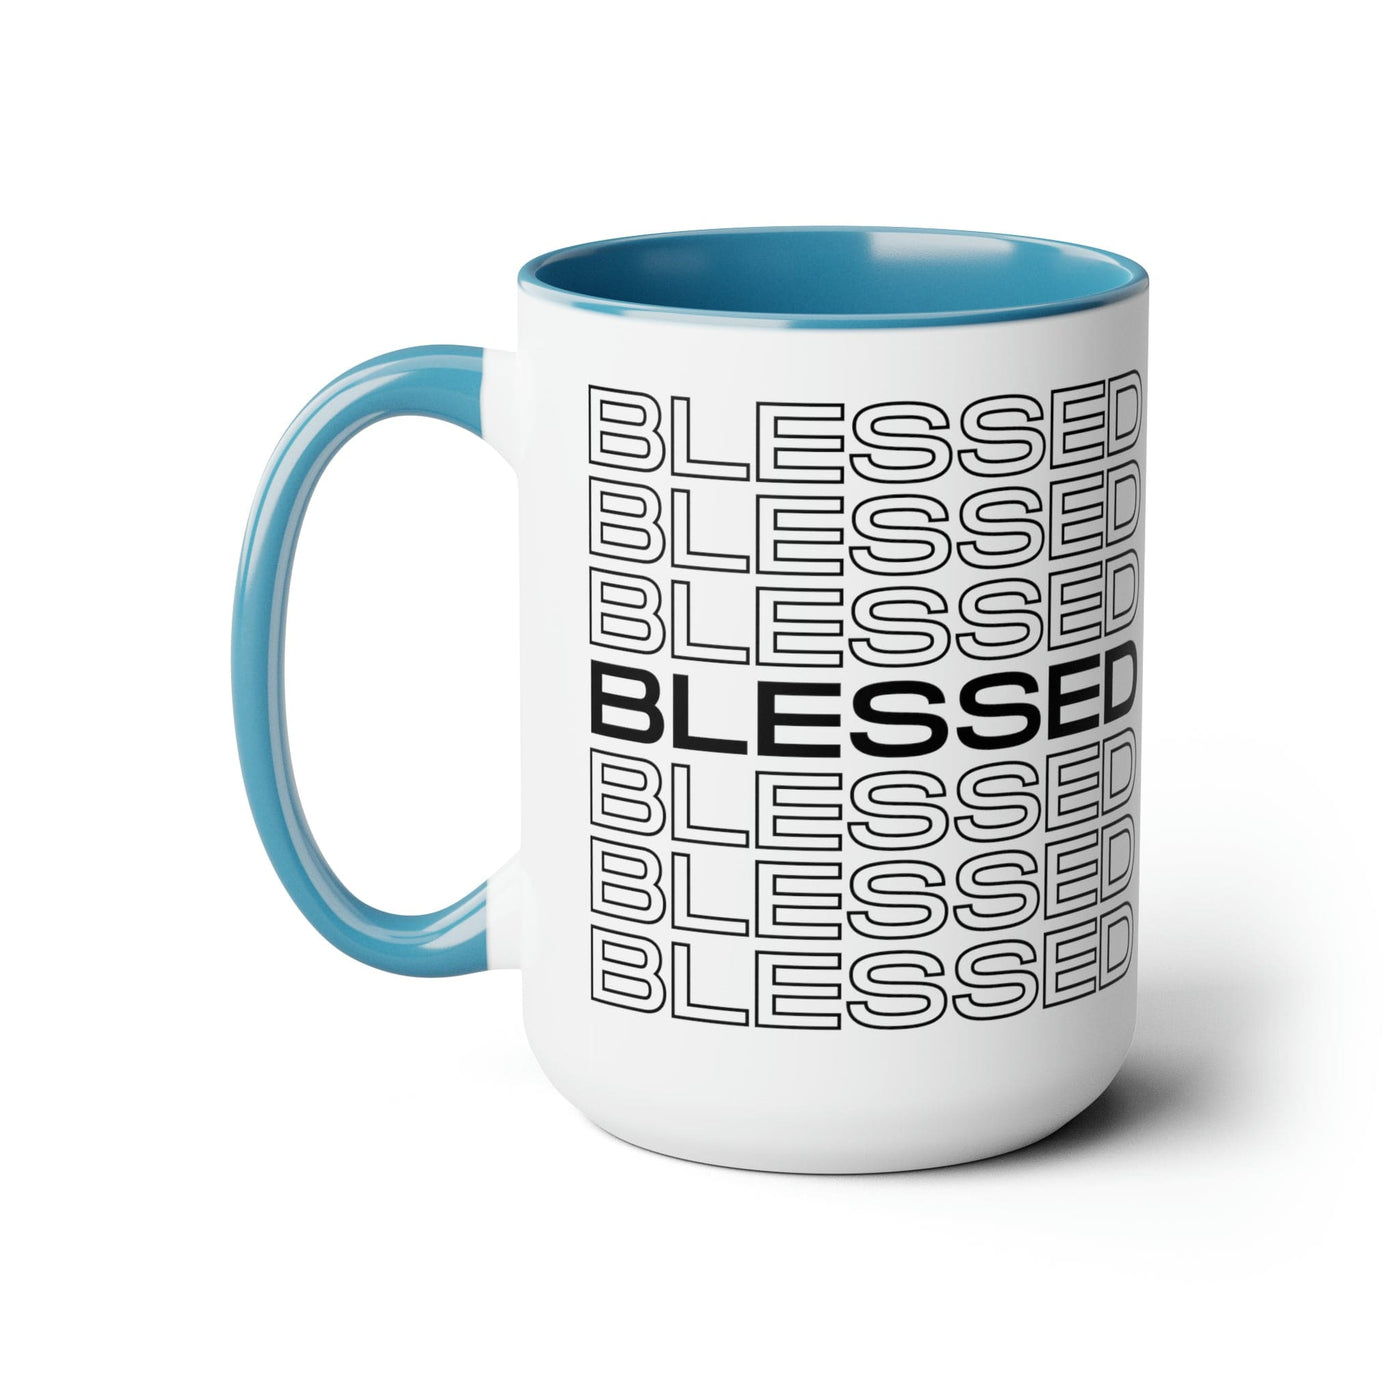 Accent Ceramic Mug 15oz Stacked Blessed Print - Inspirational Affirmation Black